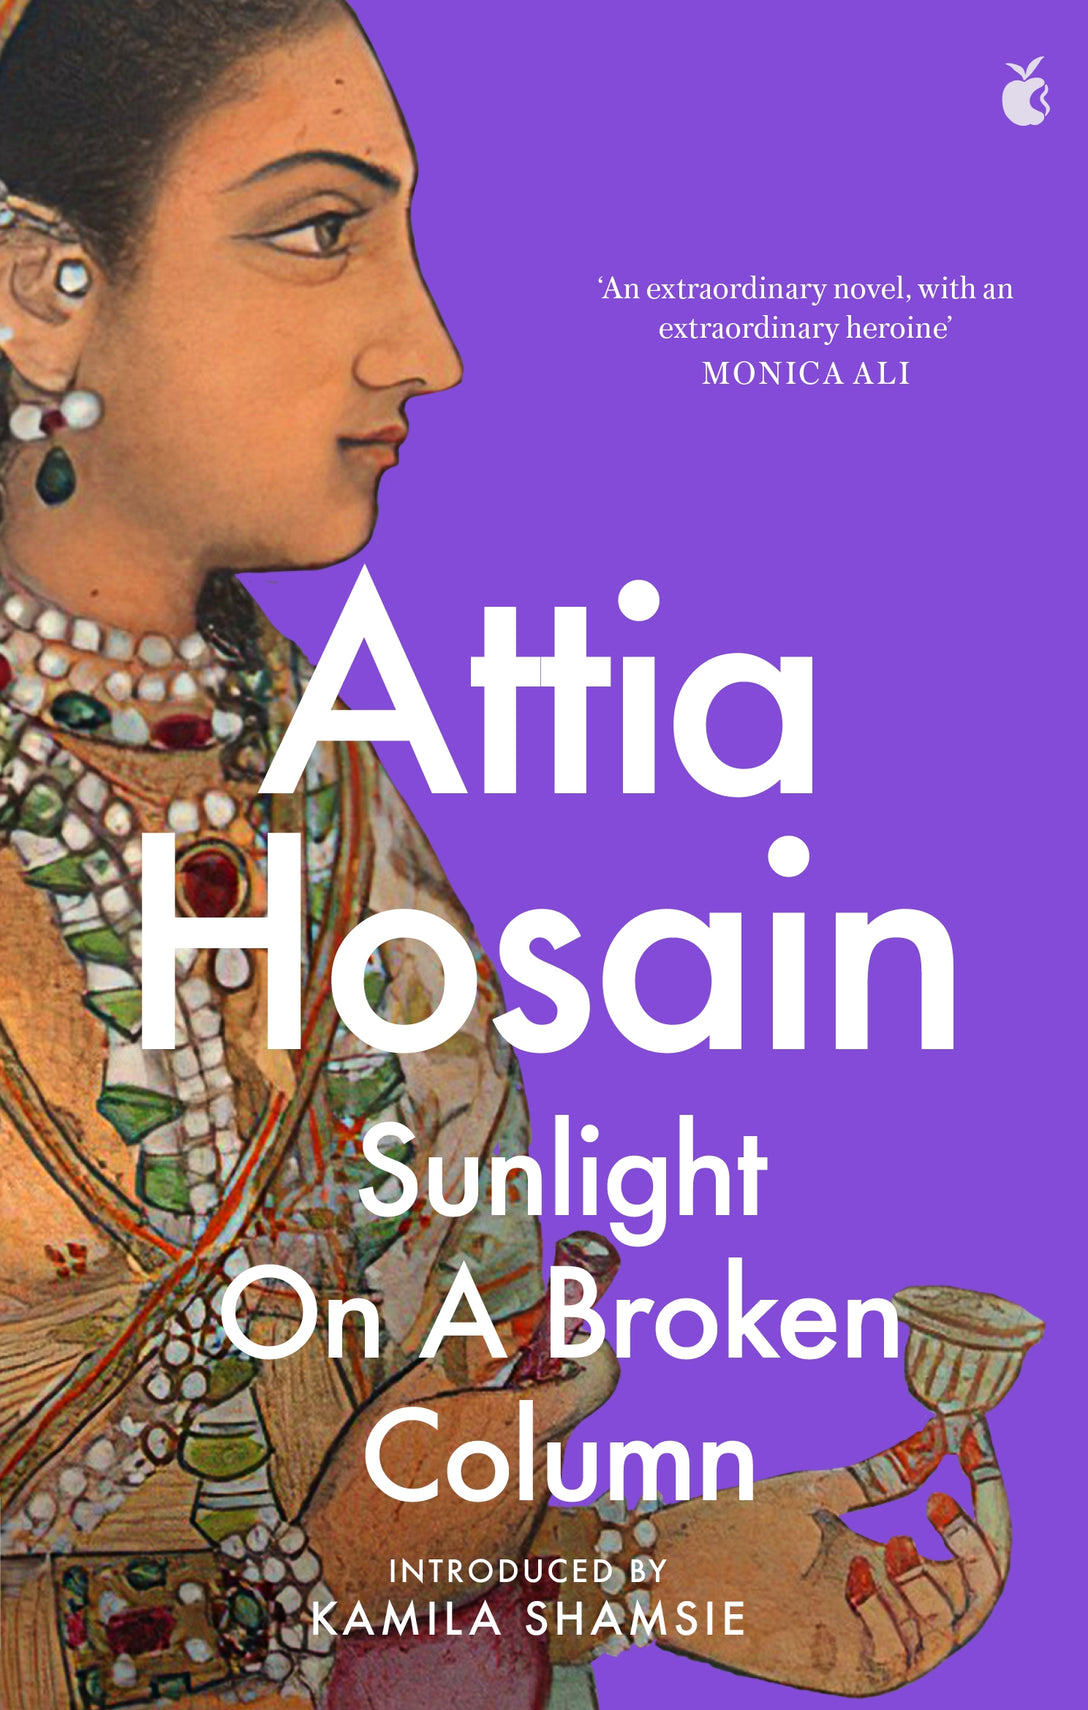 Sunlight on a Broken Column by Attia Hosain